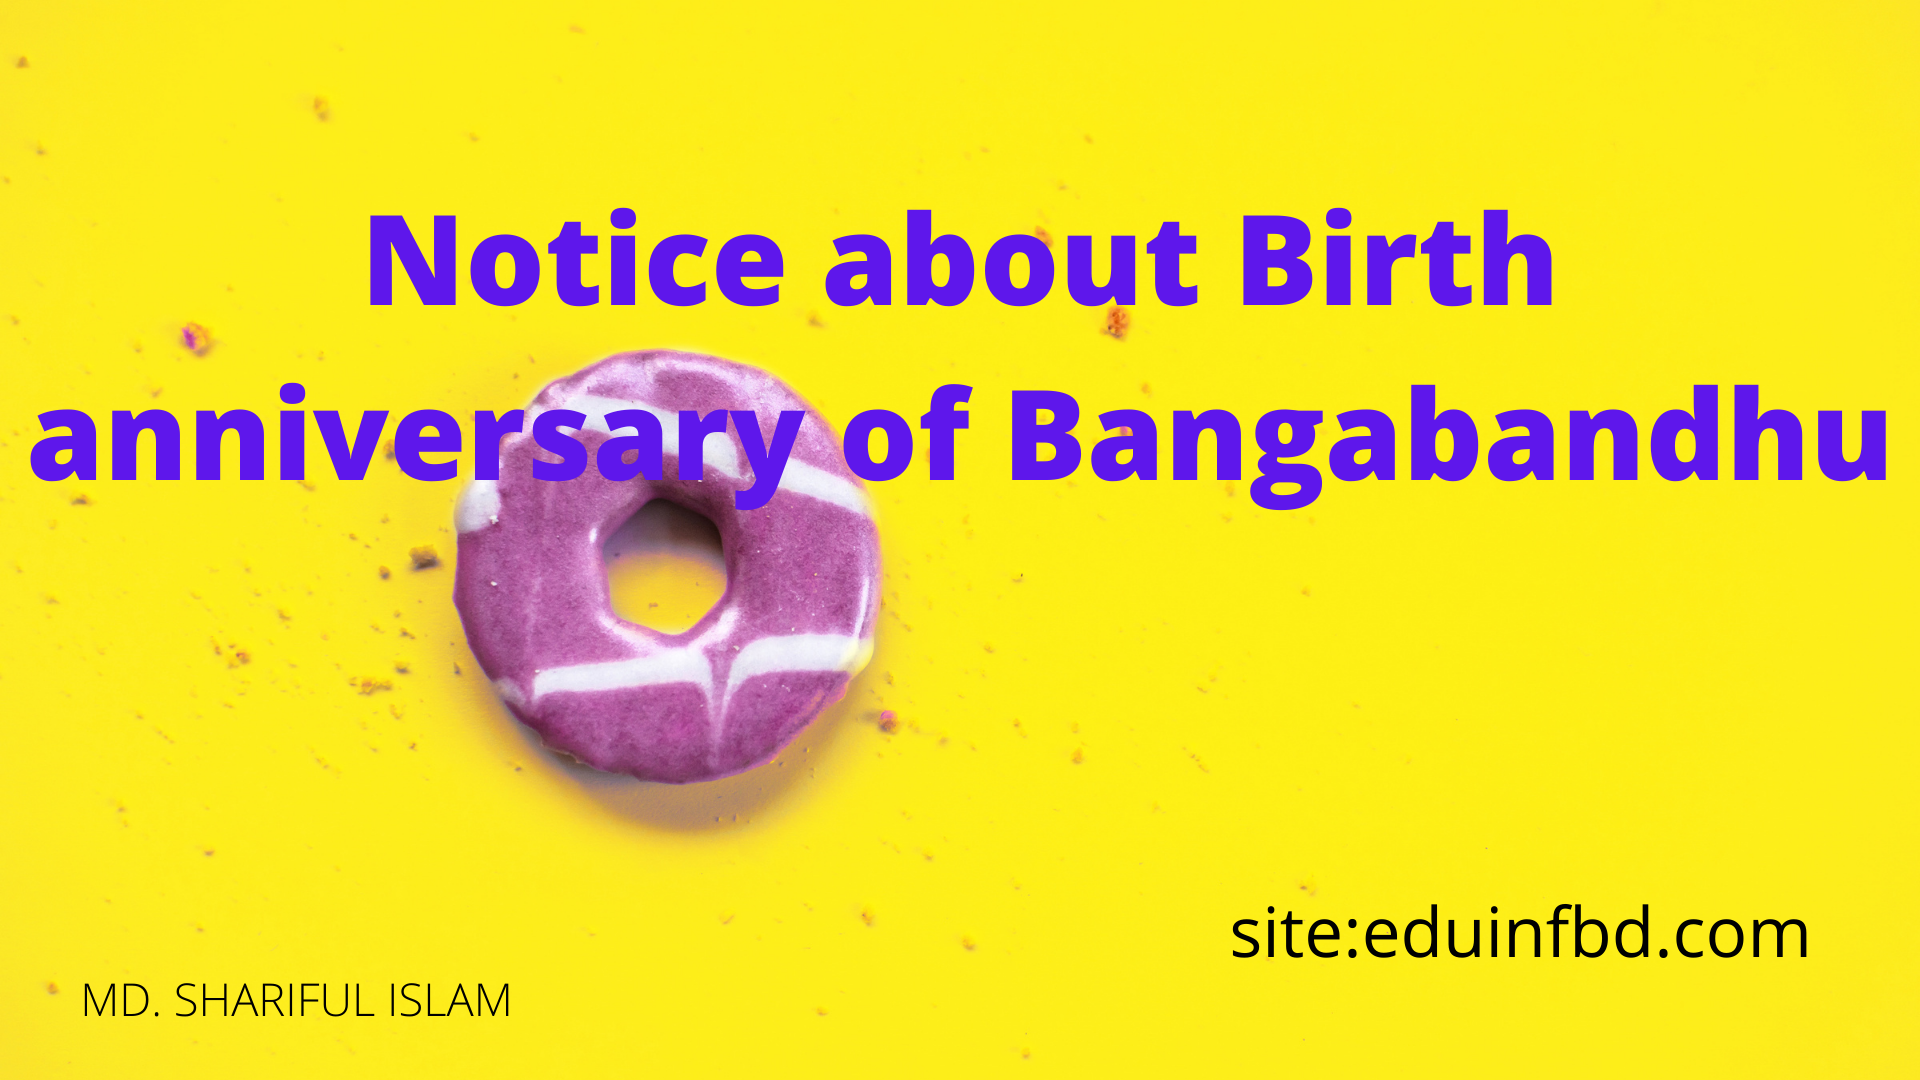 Notice about Birth anniversary of Bangabandhu